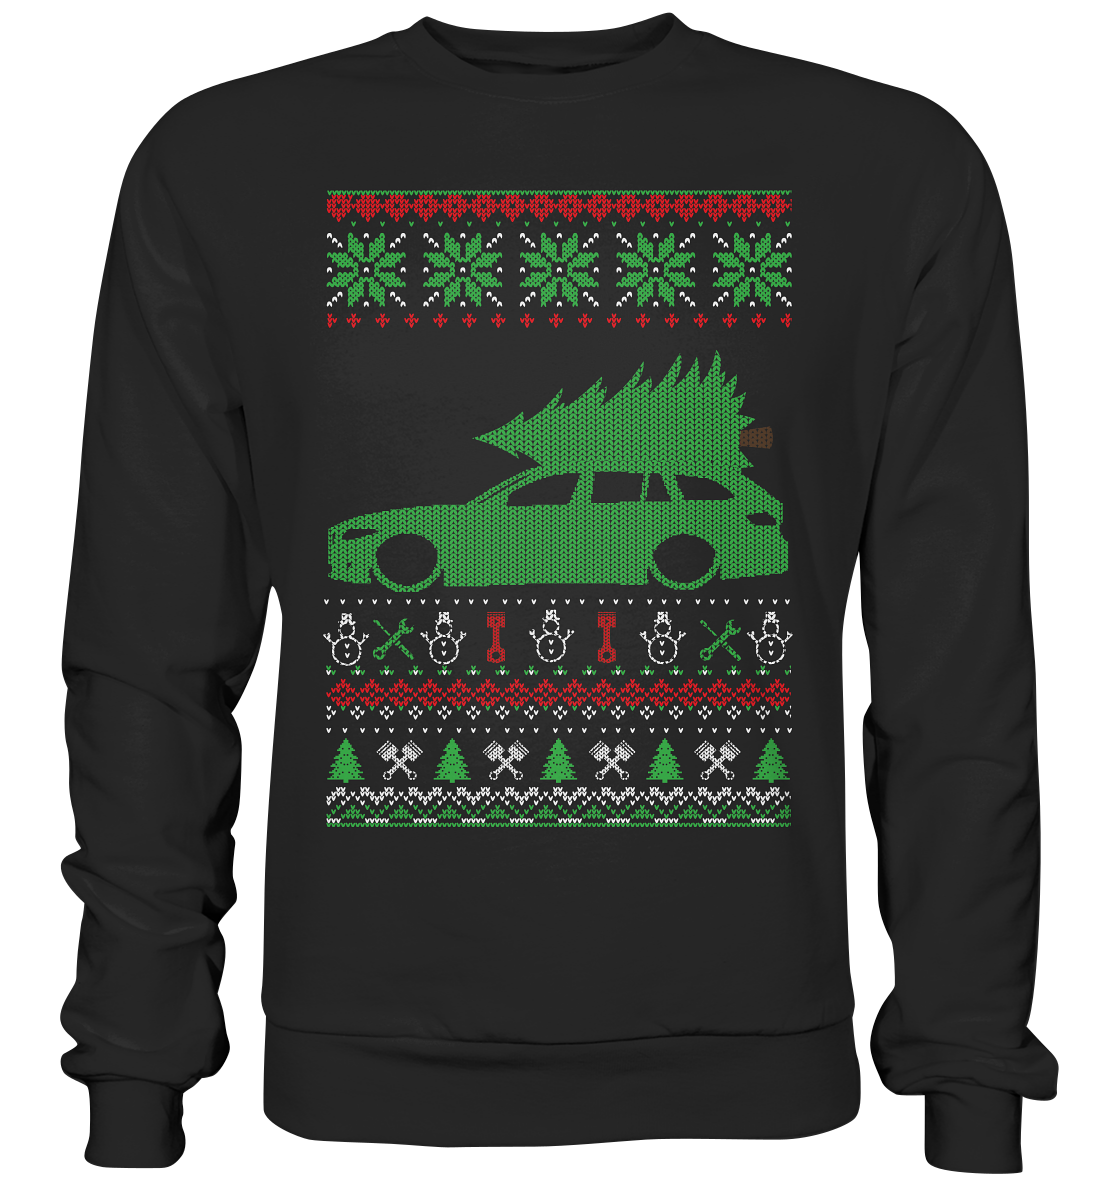 CODUGLY_BGKF11 - Premium Sweatshirt